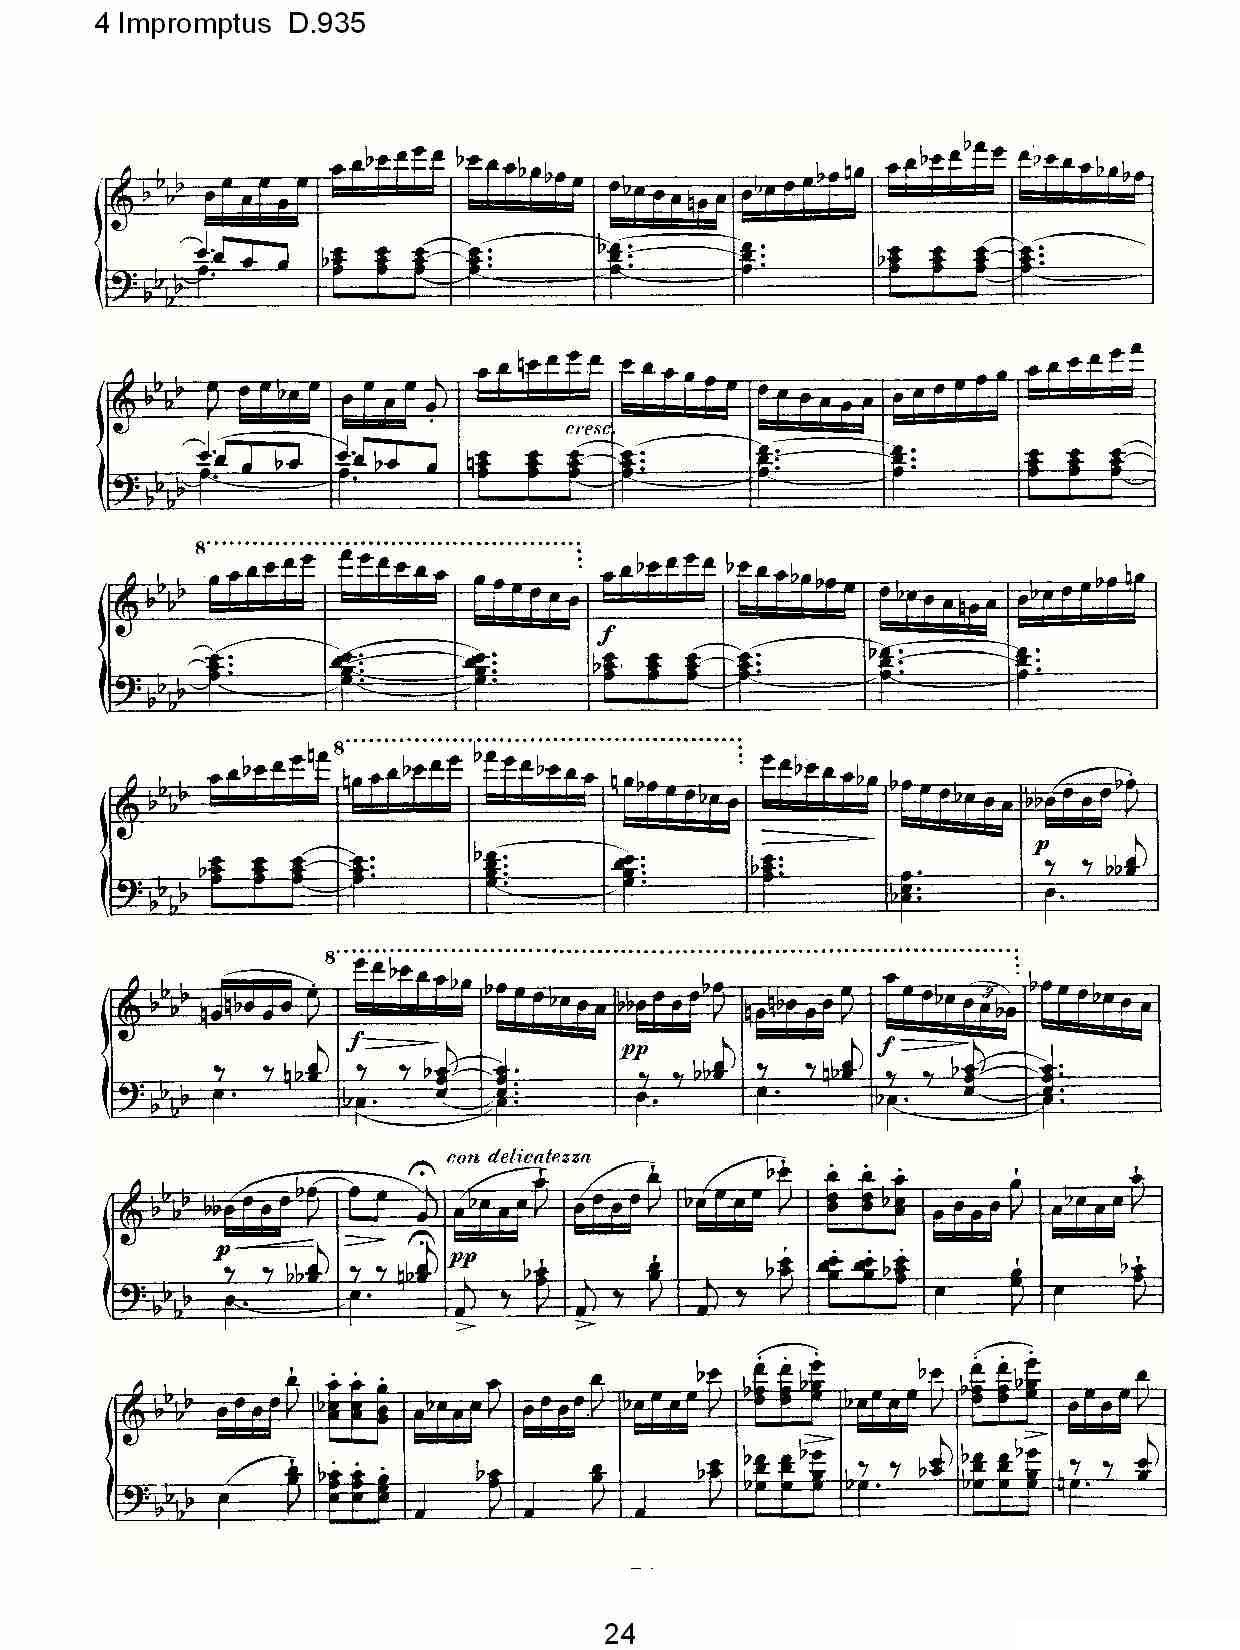 4 Impromptus D.935（4人即兴演奏D.935）钢琴曲谱（图24）